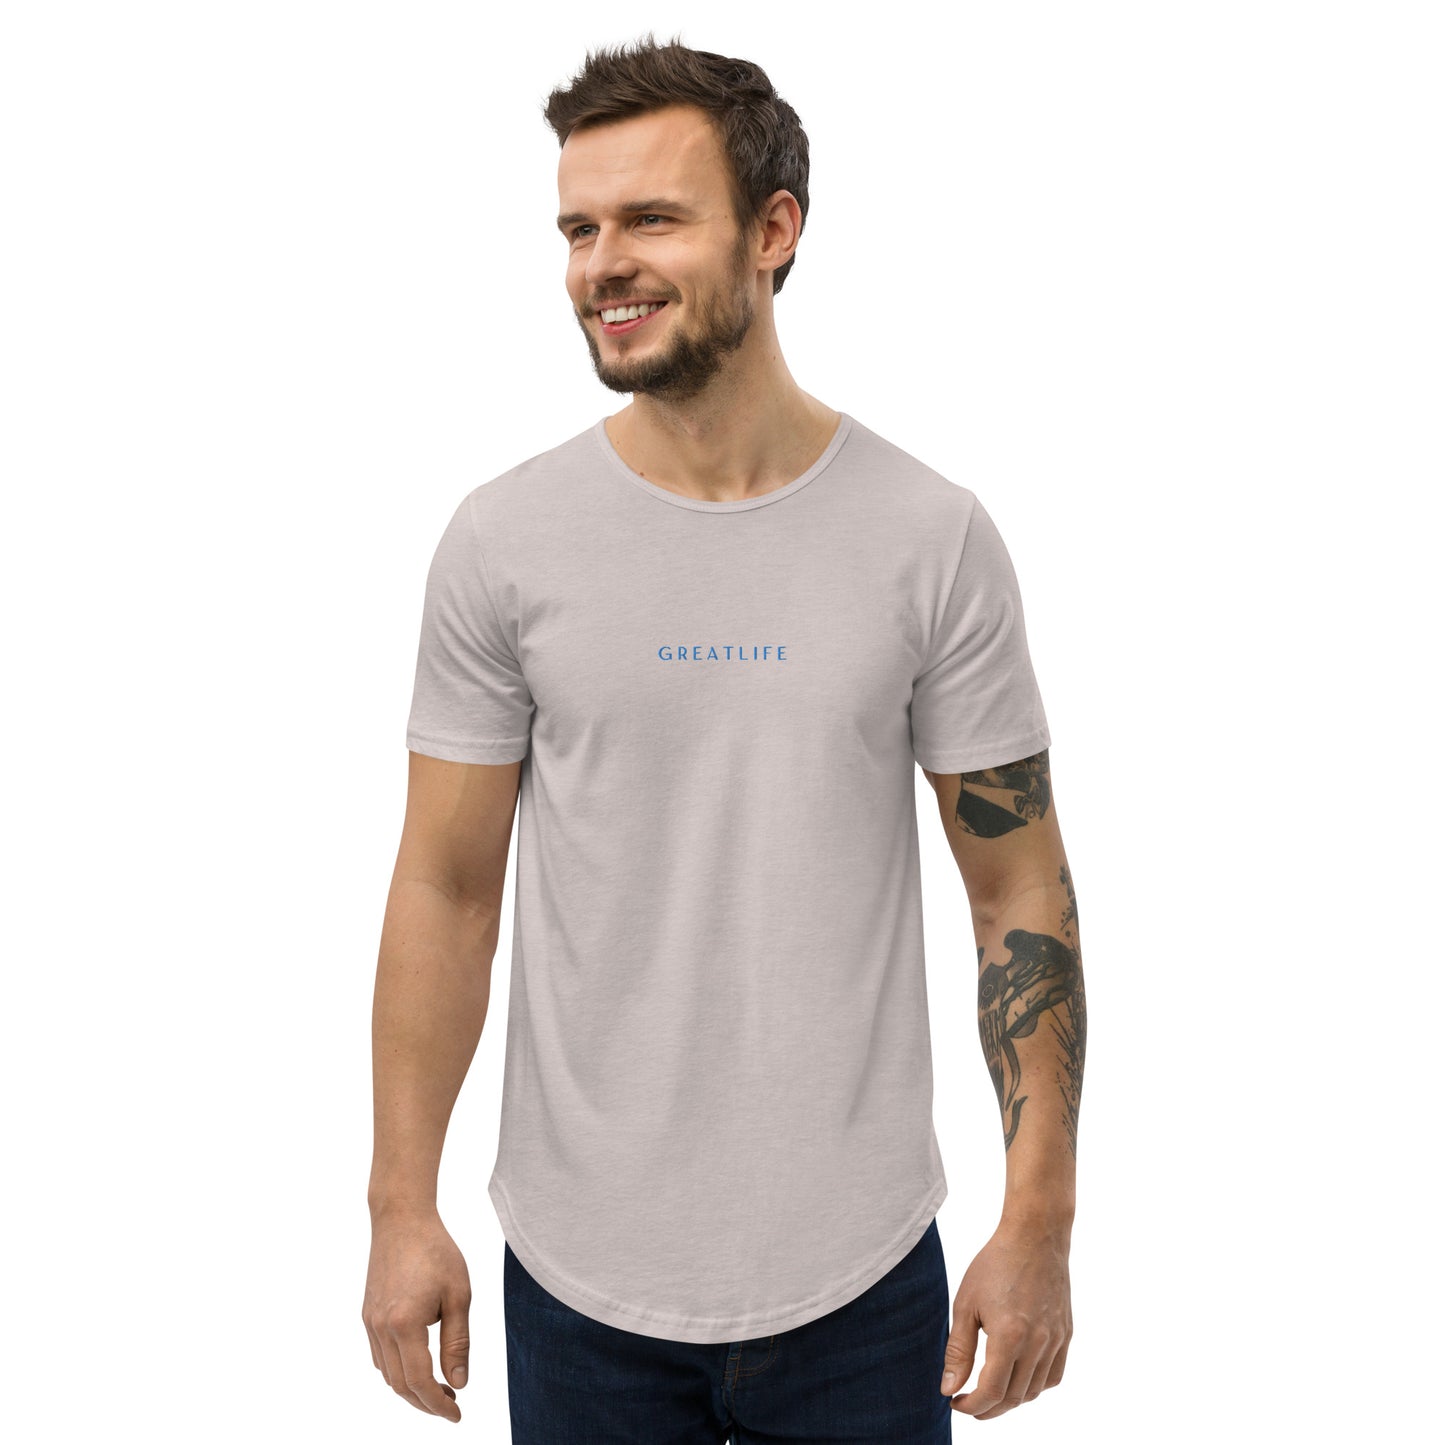 GREATLIFE / FOCUS FORWARD Men's Curved Hem T-Shirt